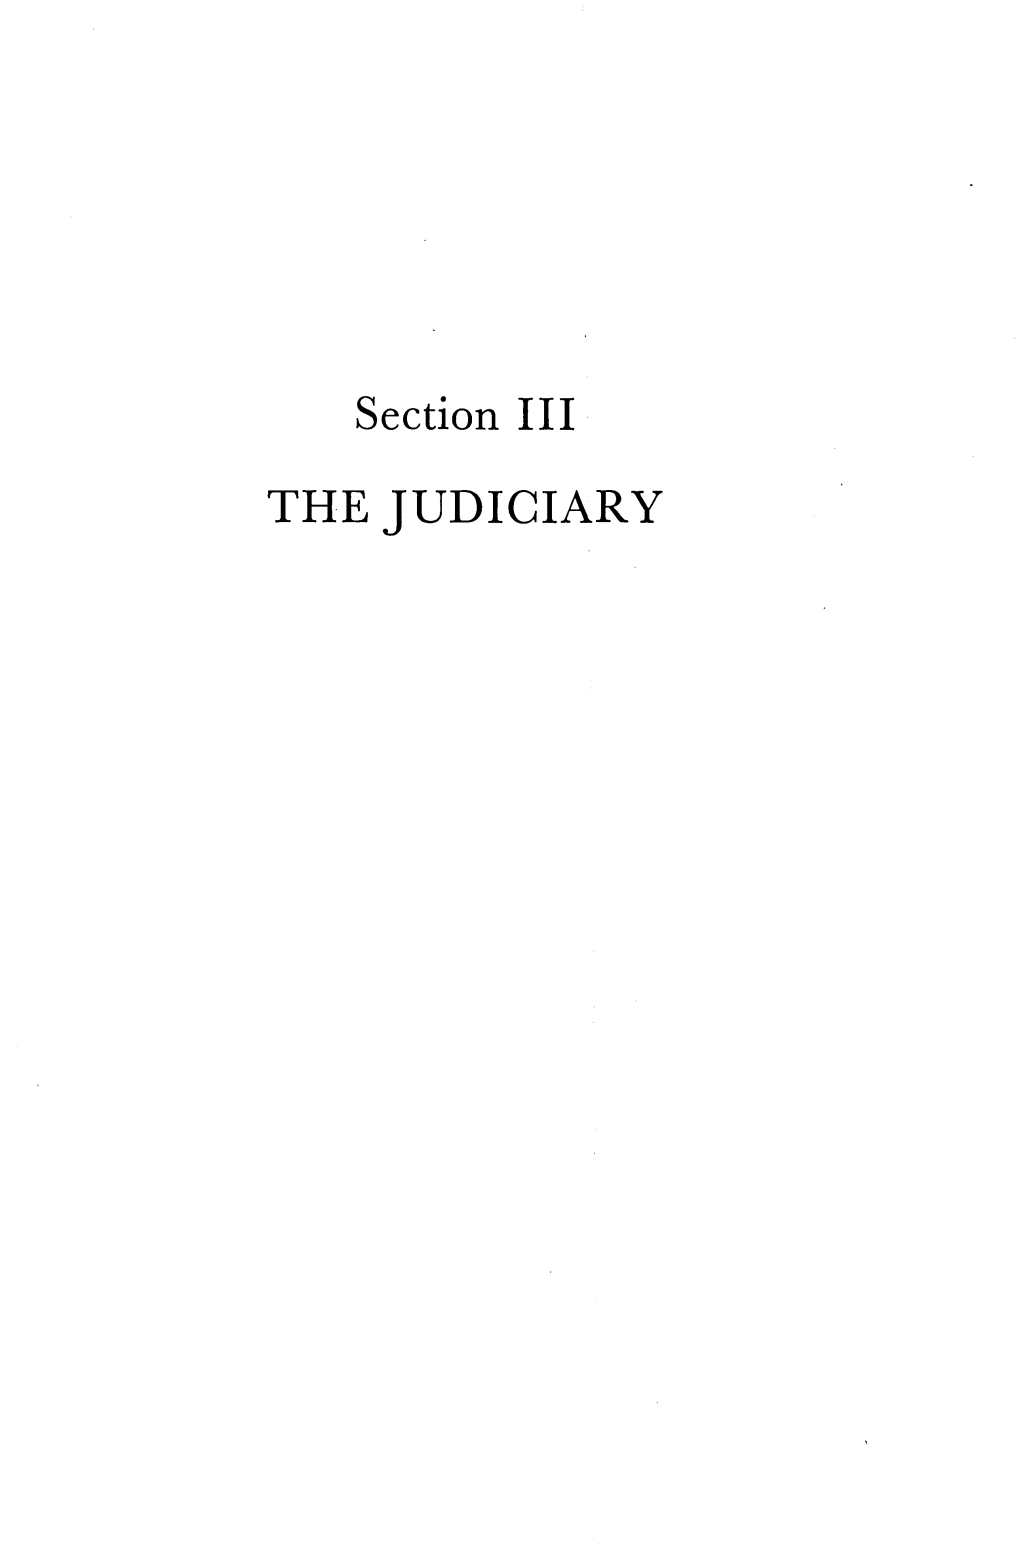 THE JUDICIARY the Judiciary